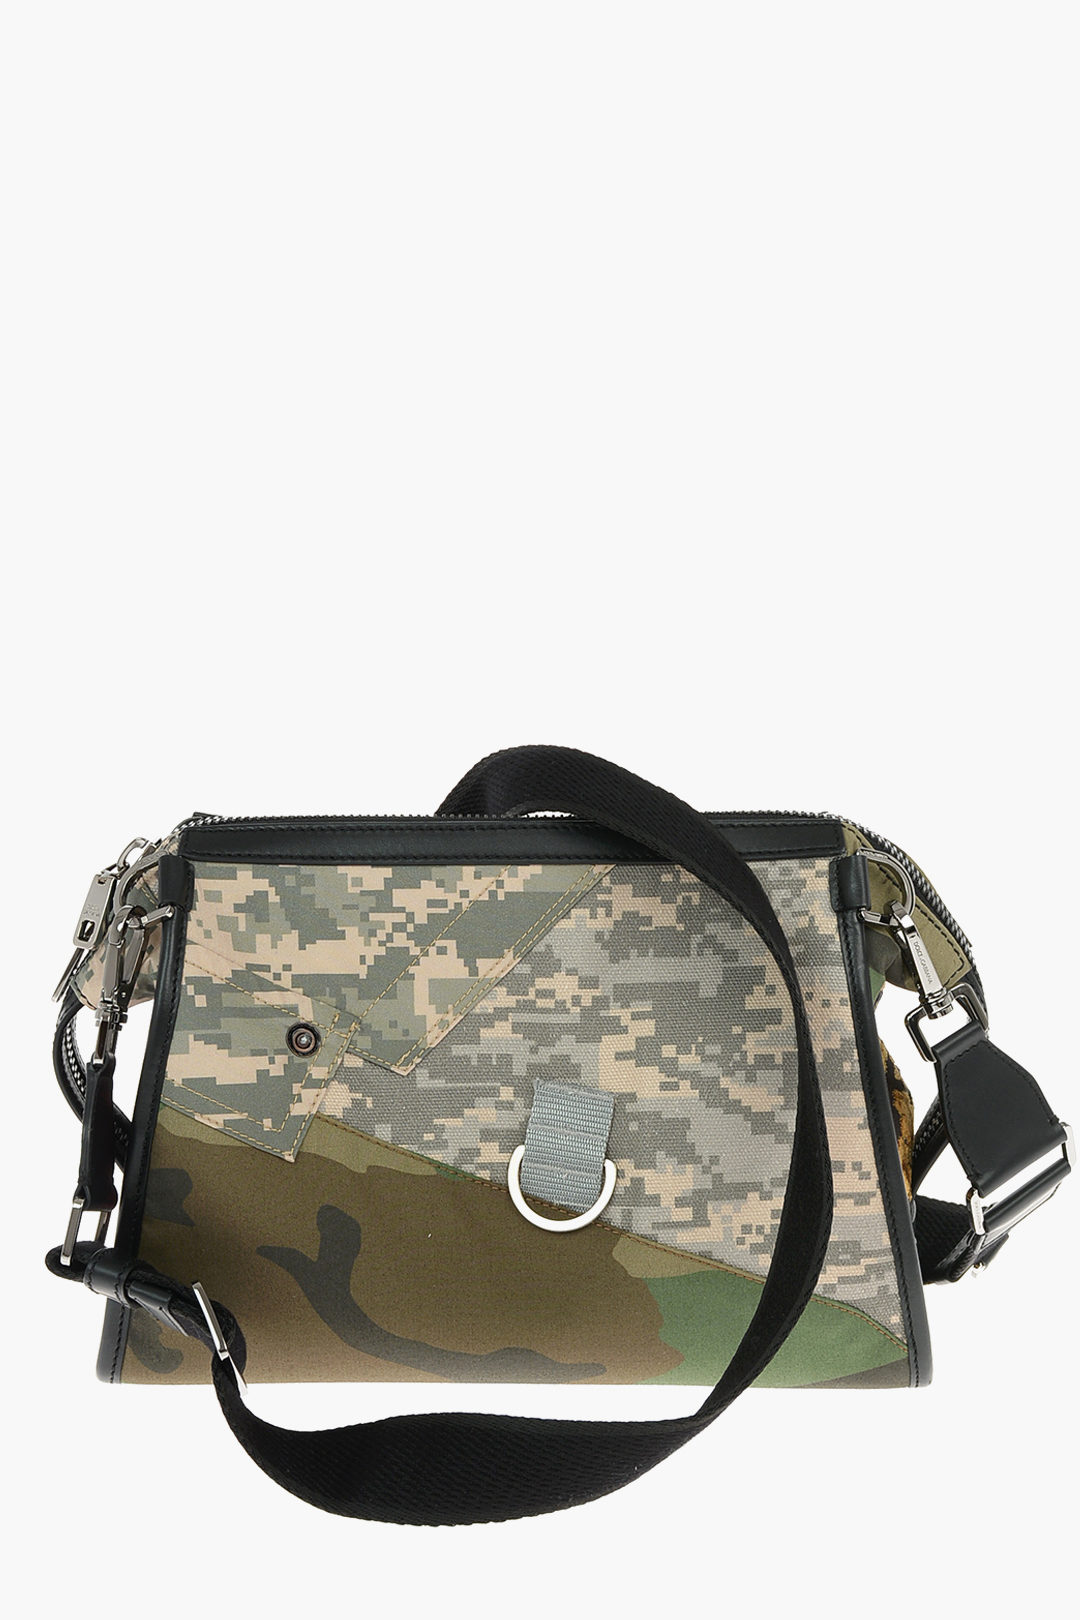 Extension-fmedShops, Fila kooptoo cross-body bag in camo